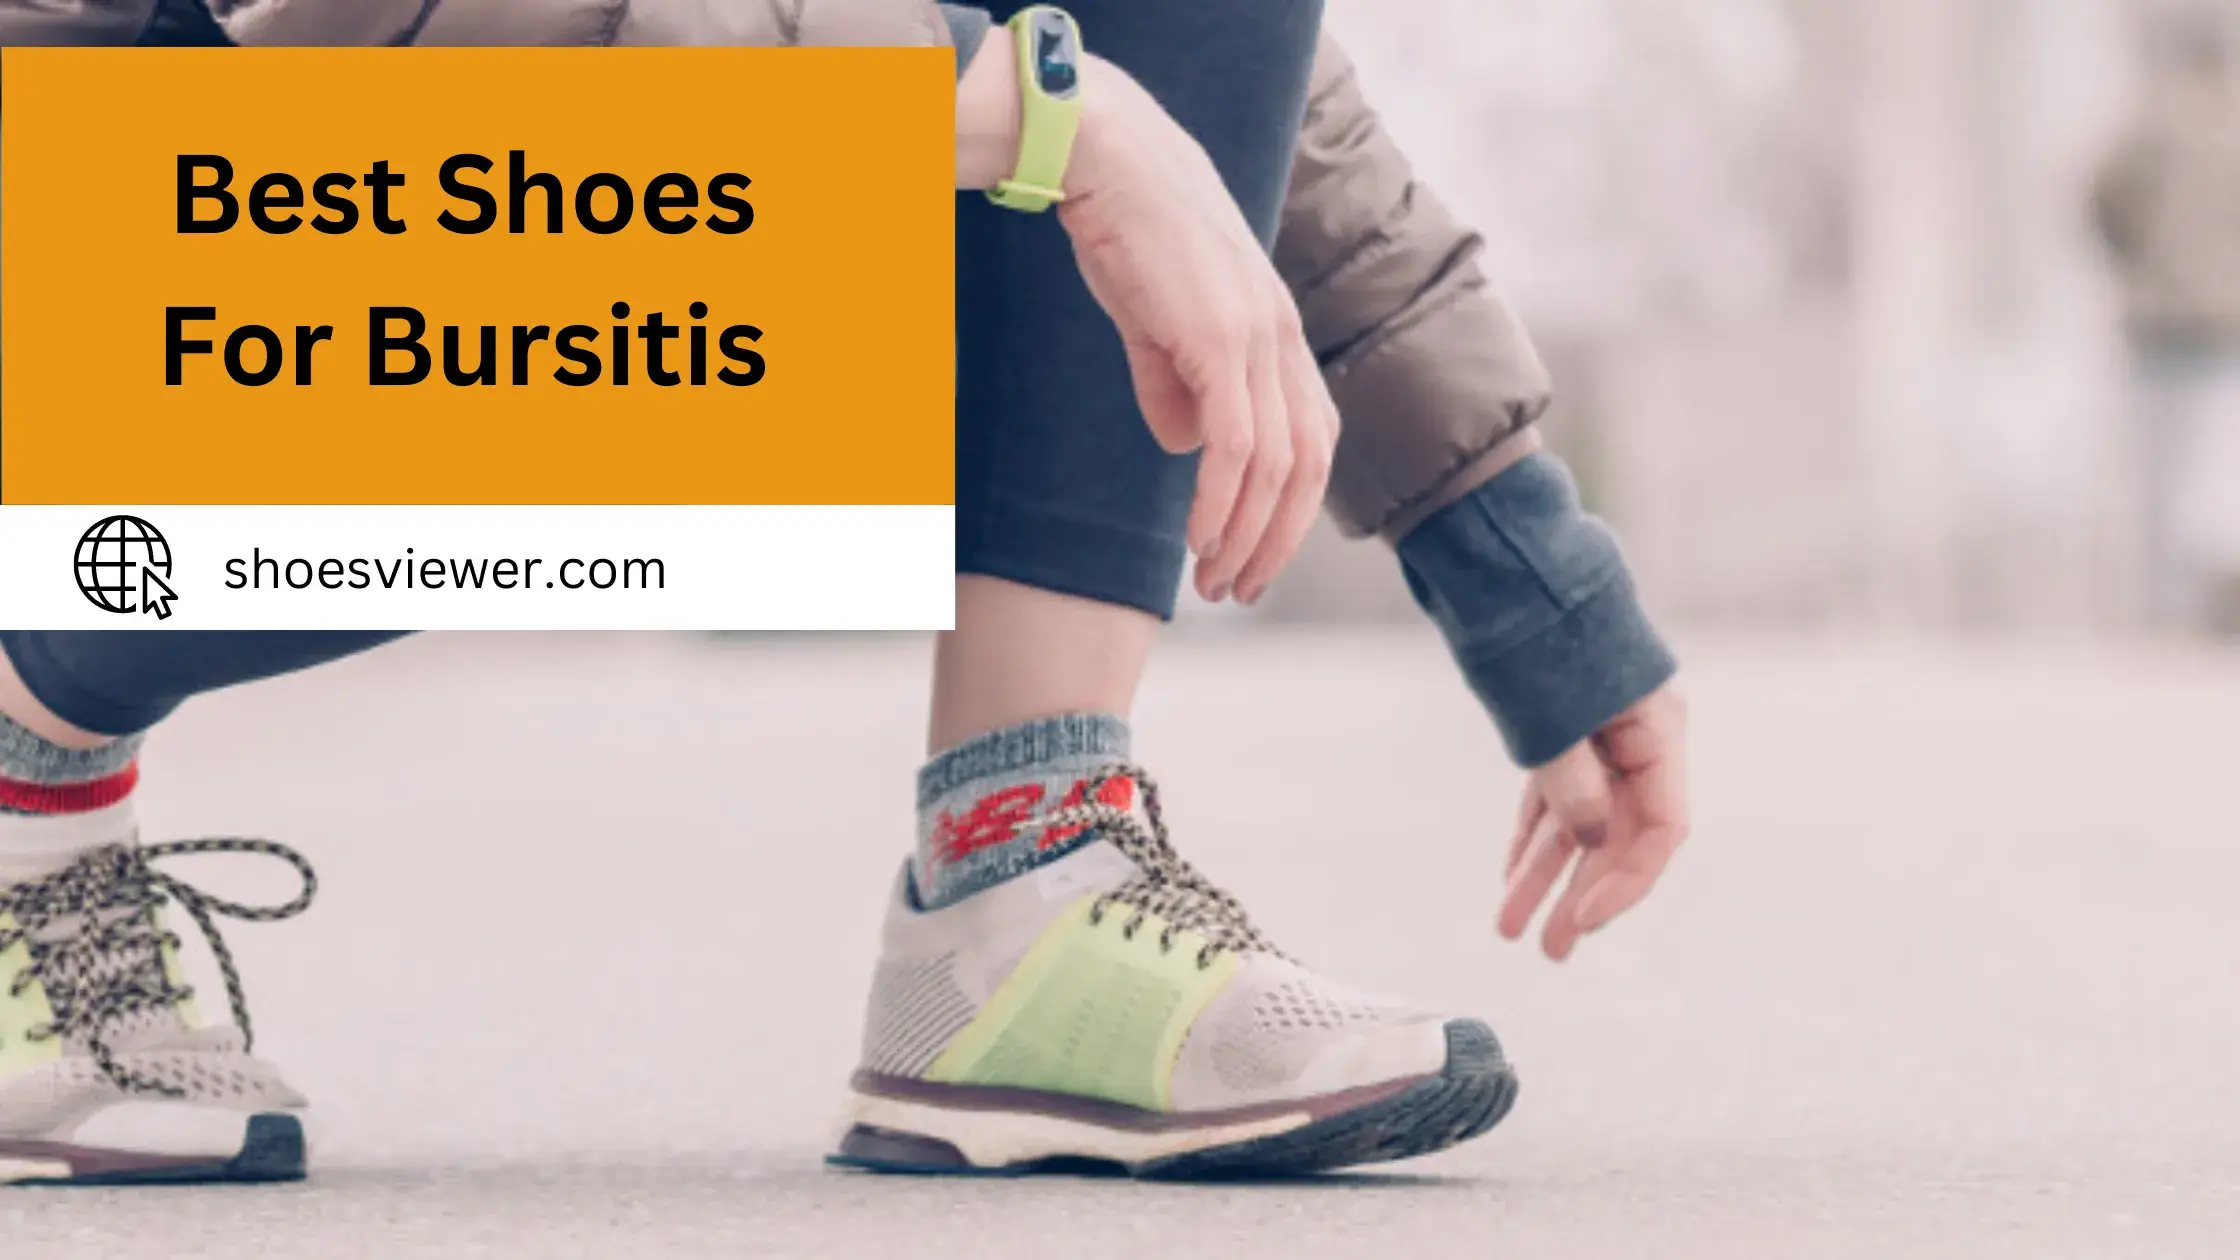 Best Shoes For Bursitis - A Comprehensive Guide